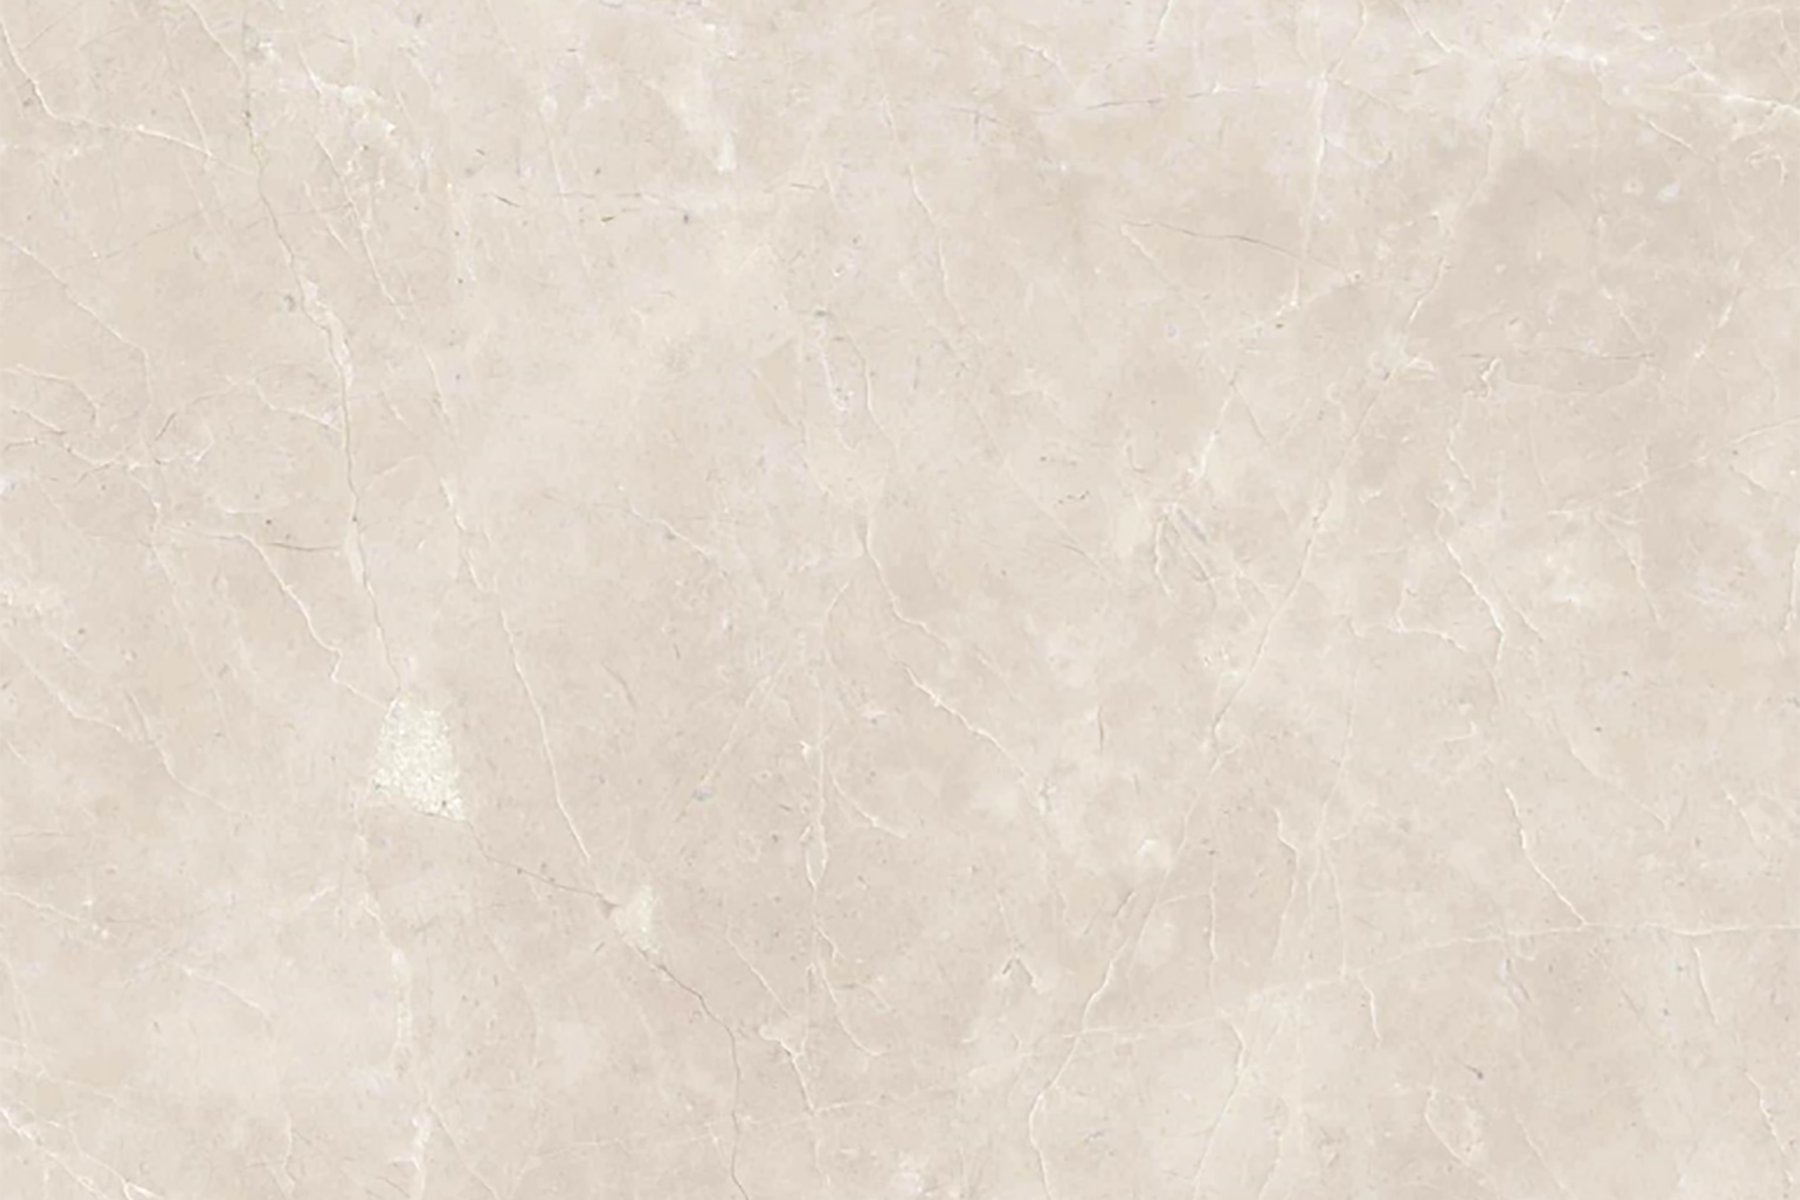 Baiyulan cream marble stone